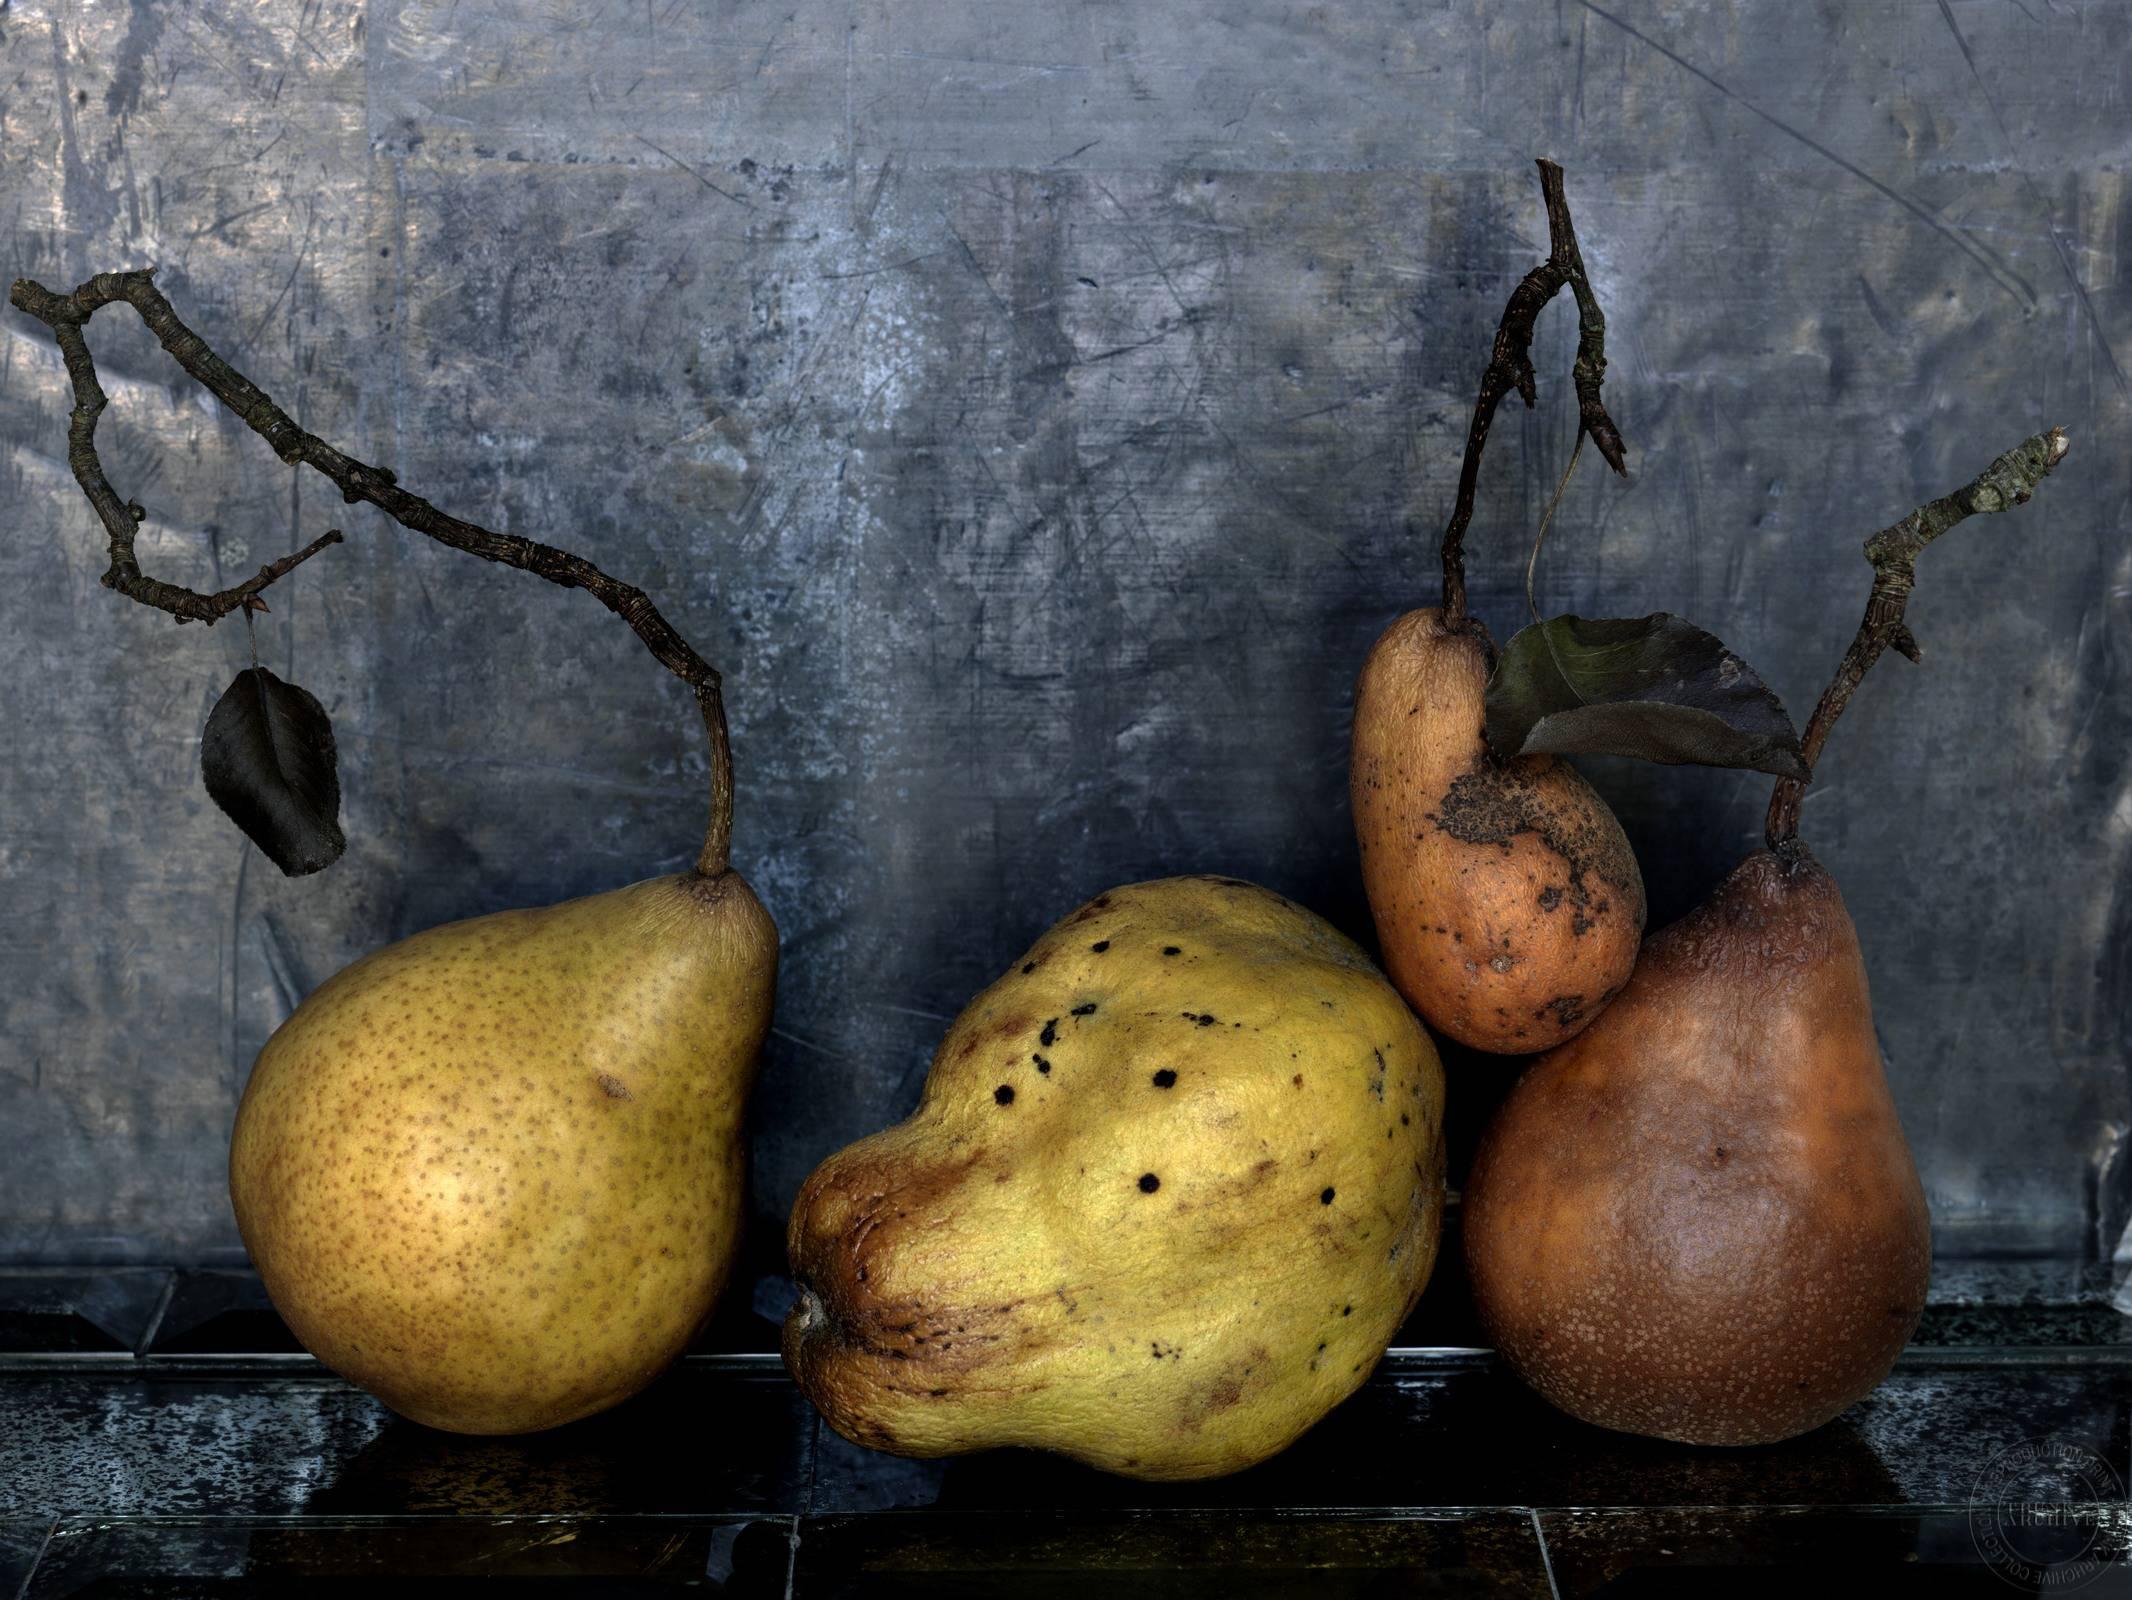 Simon Brown Color Photograph - Still Life (Pears)